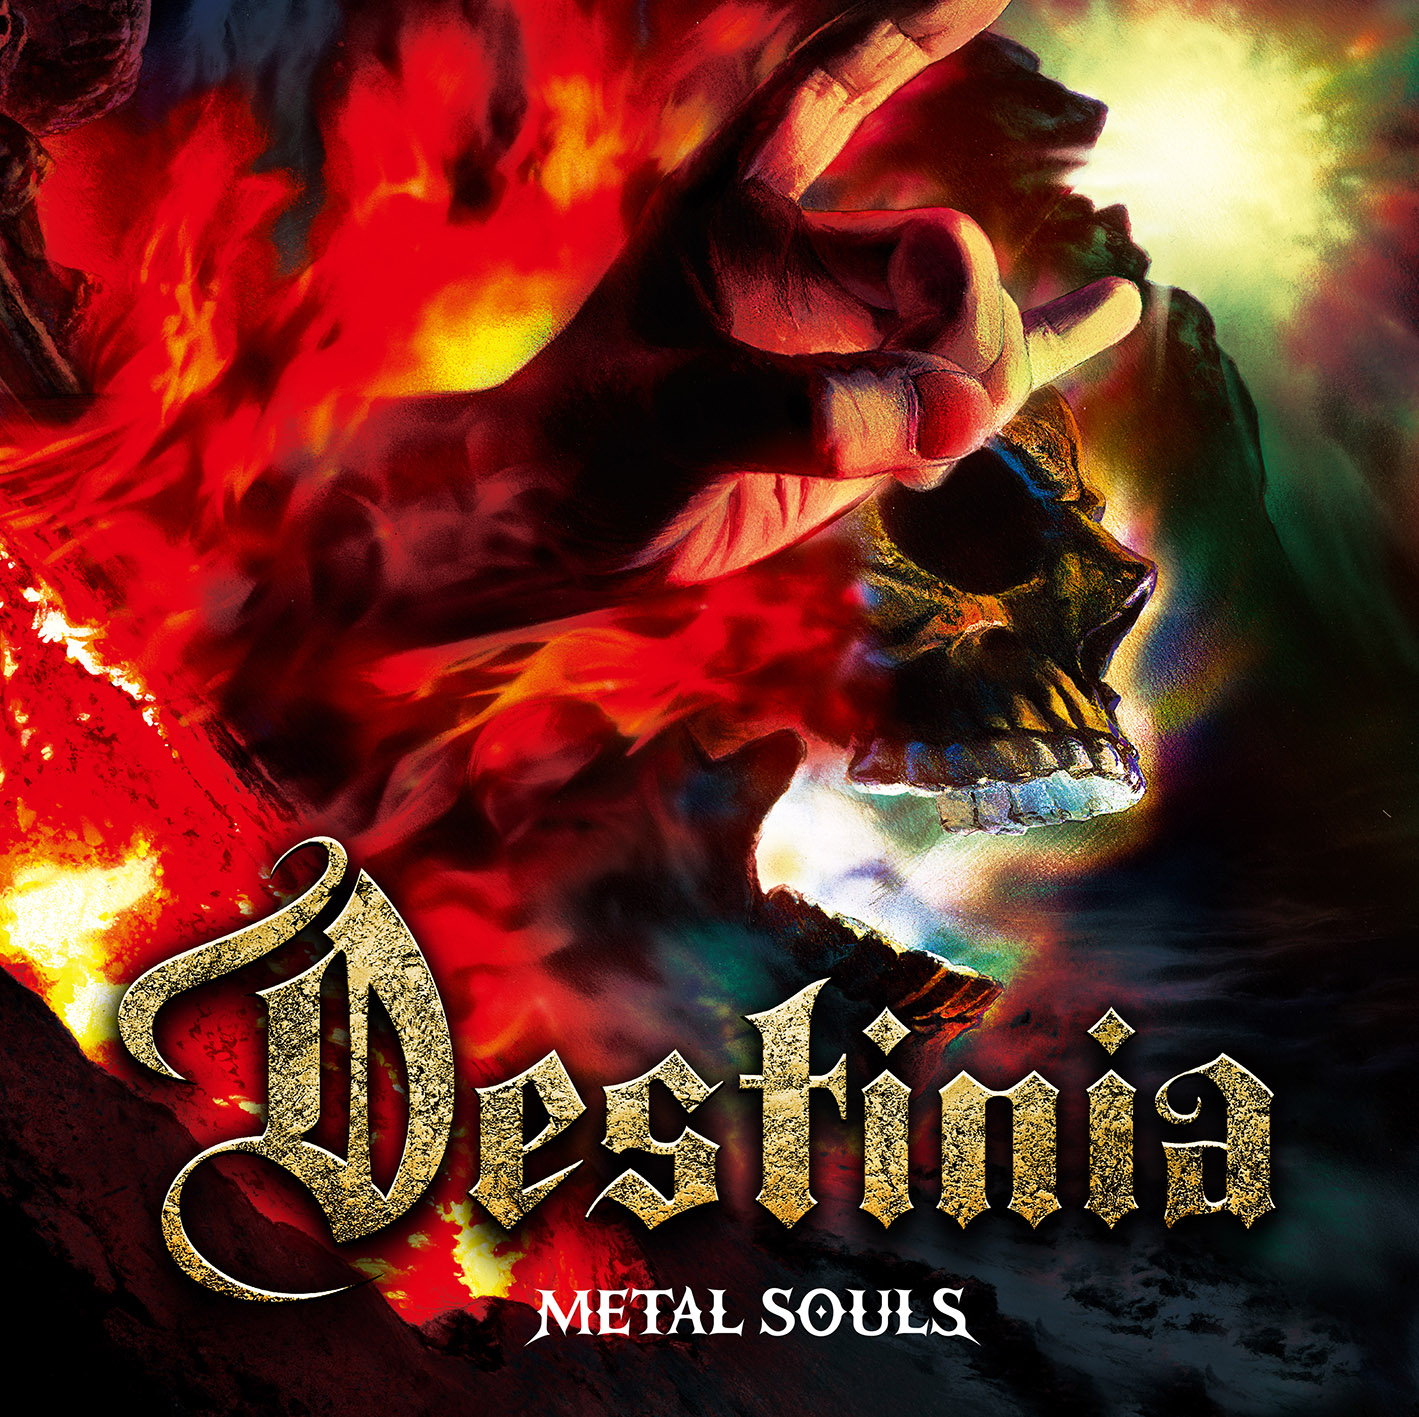 DESTINIA - Metal Souls